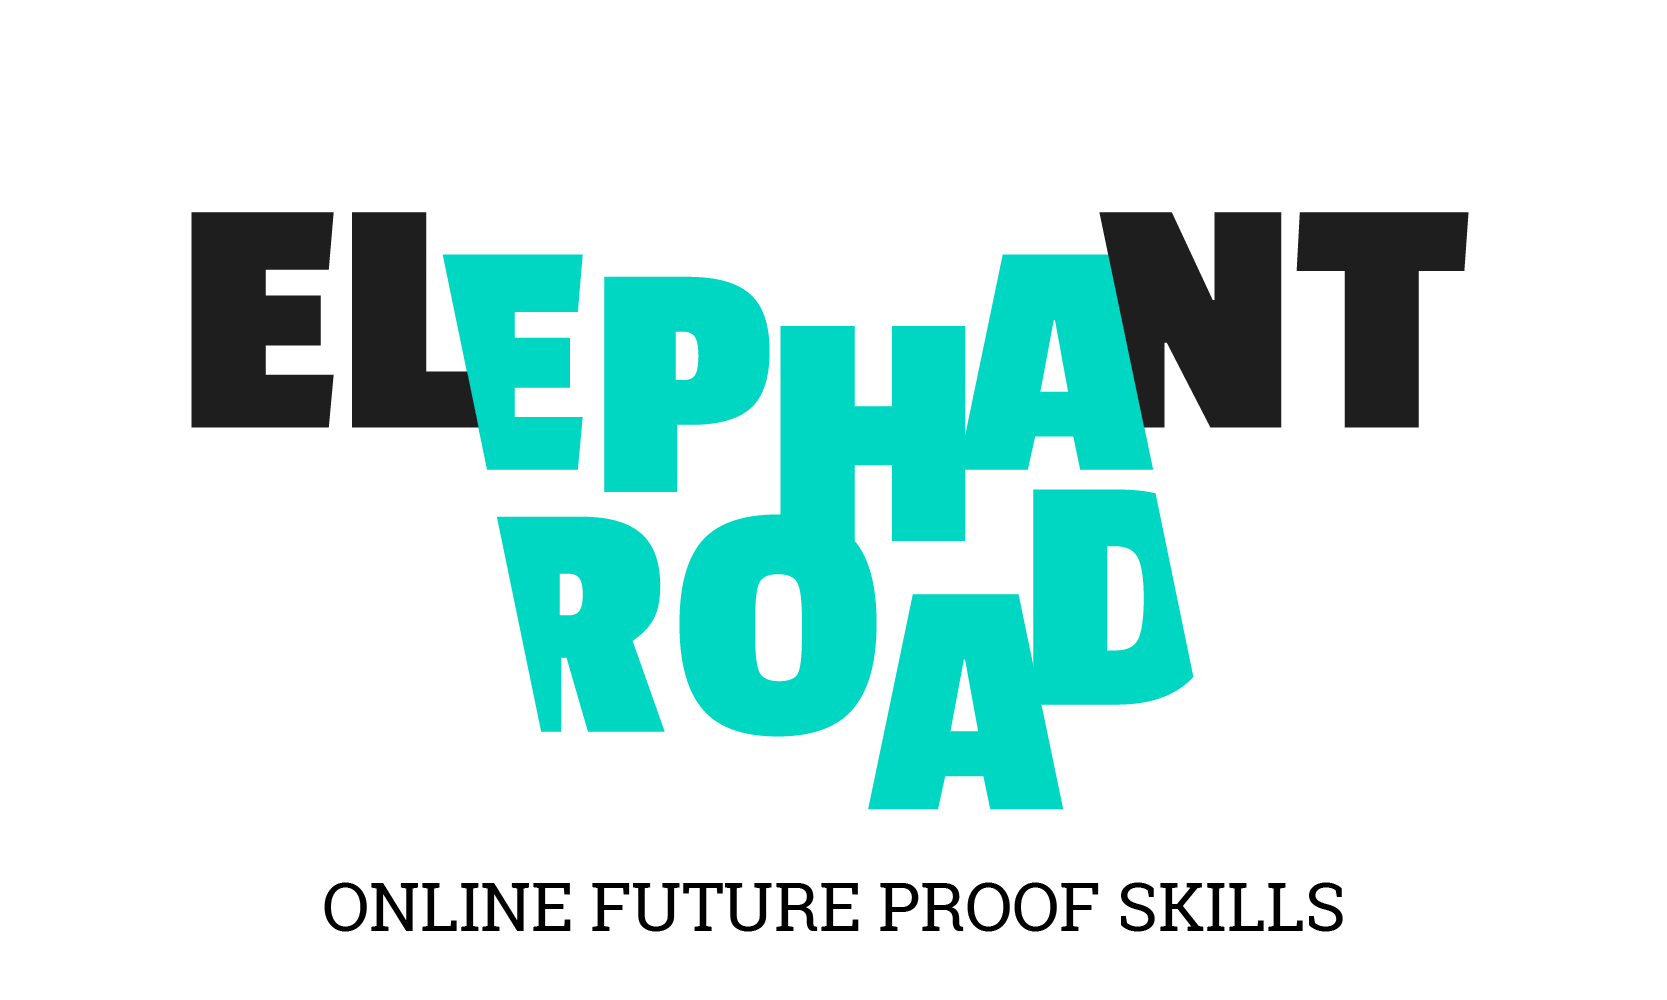 Elephant road